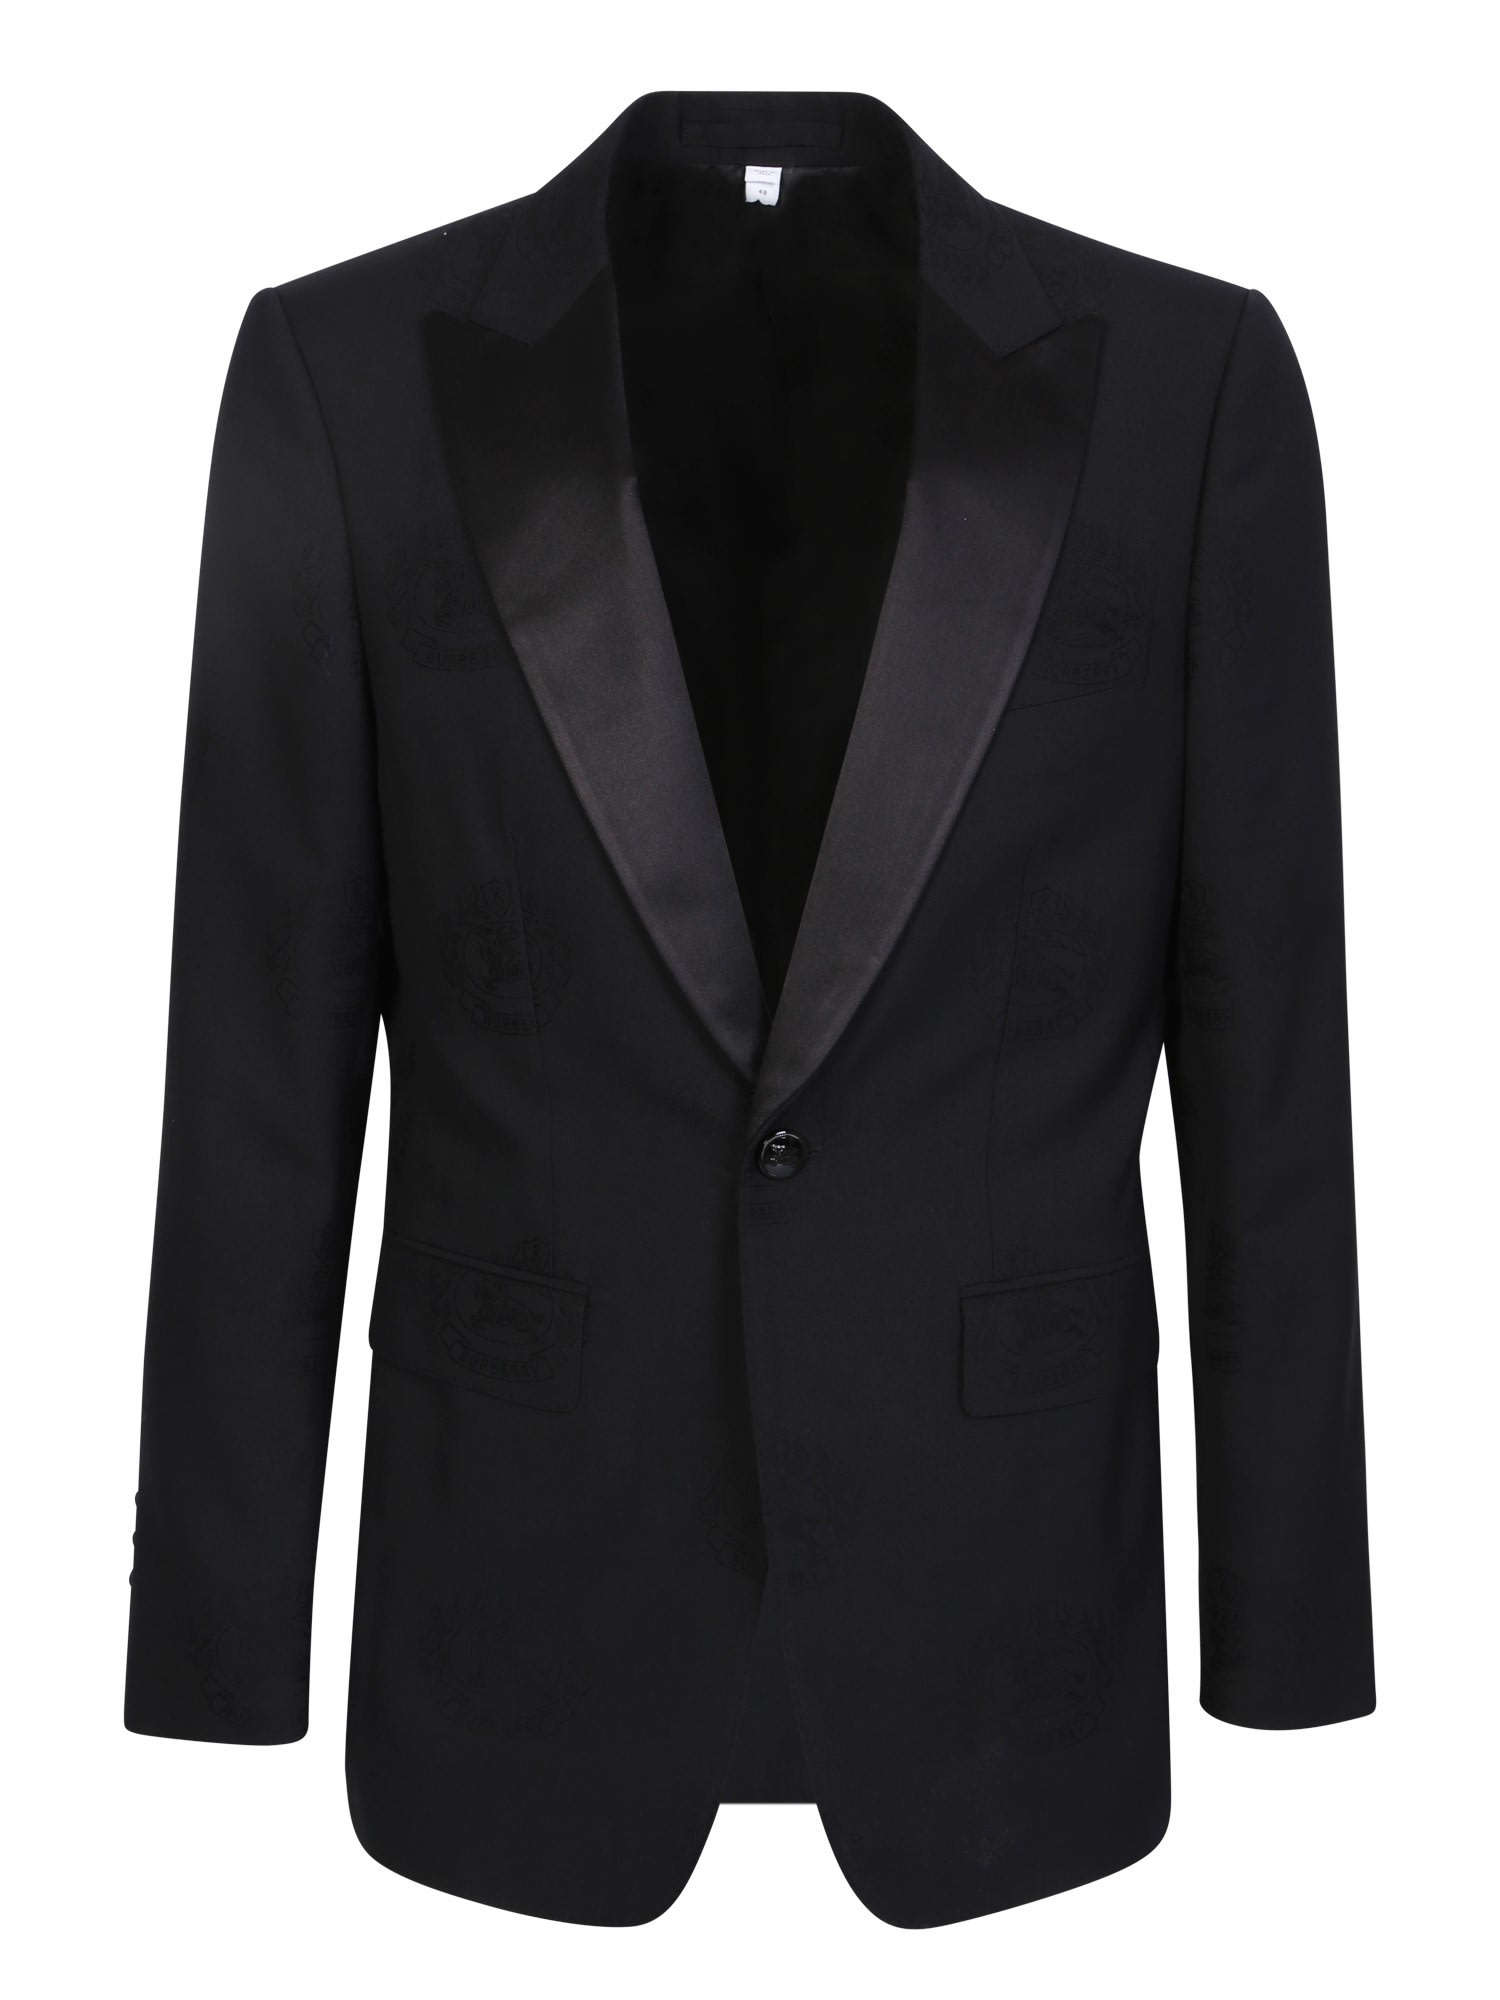 Burberry Tailored Tuxedo Jacket Edinburgh